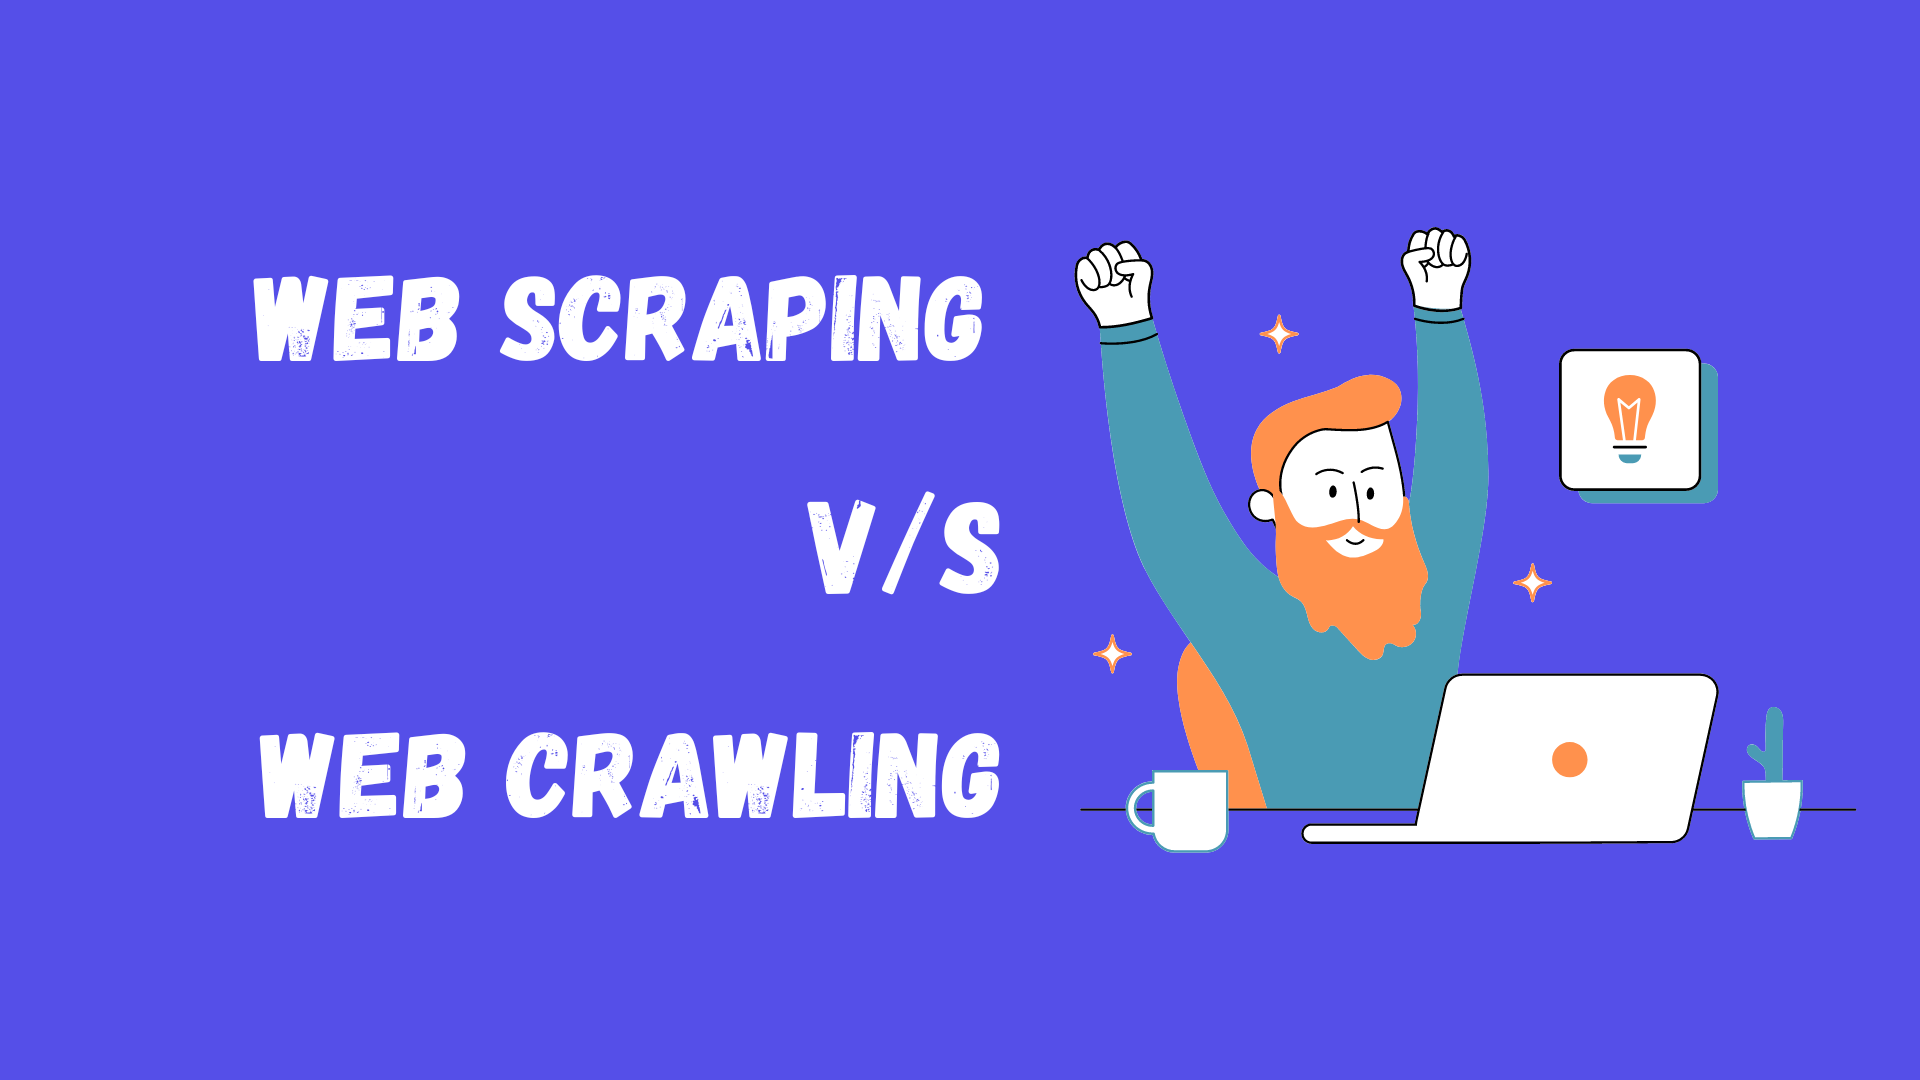 Web Scraping V/S Web Crawling